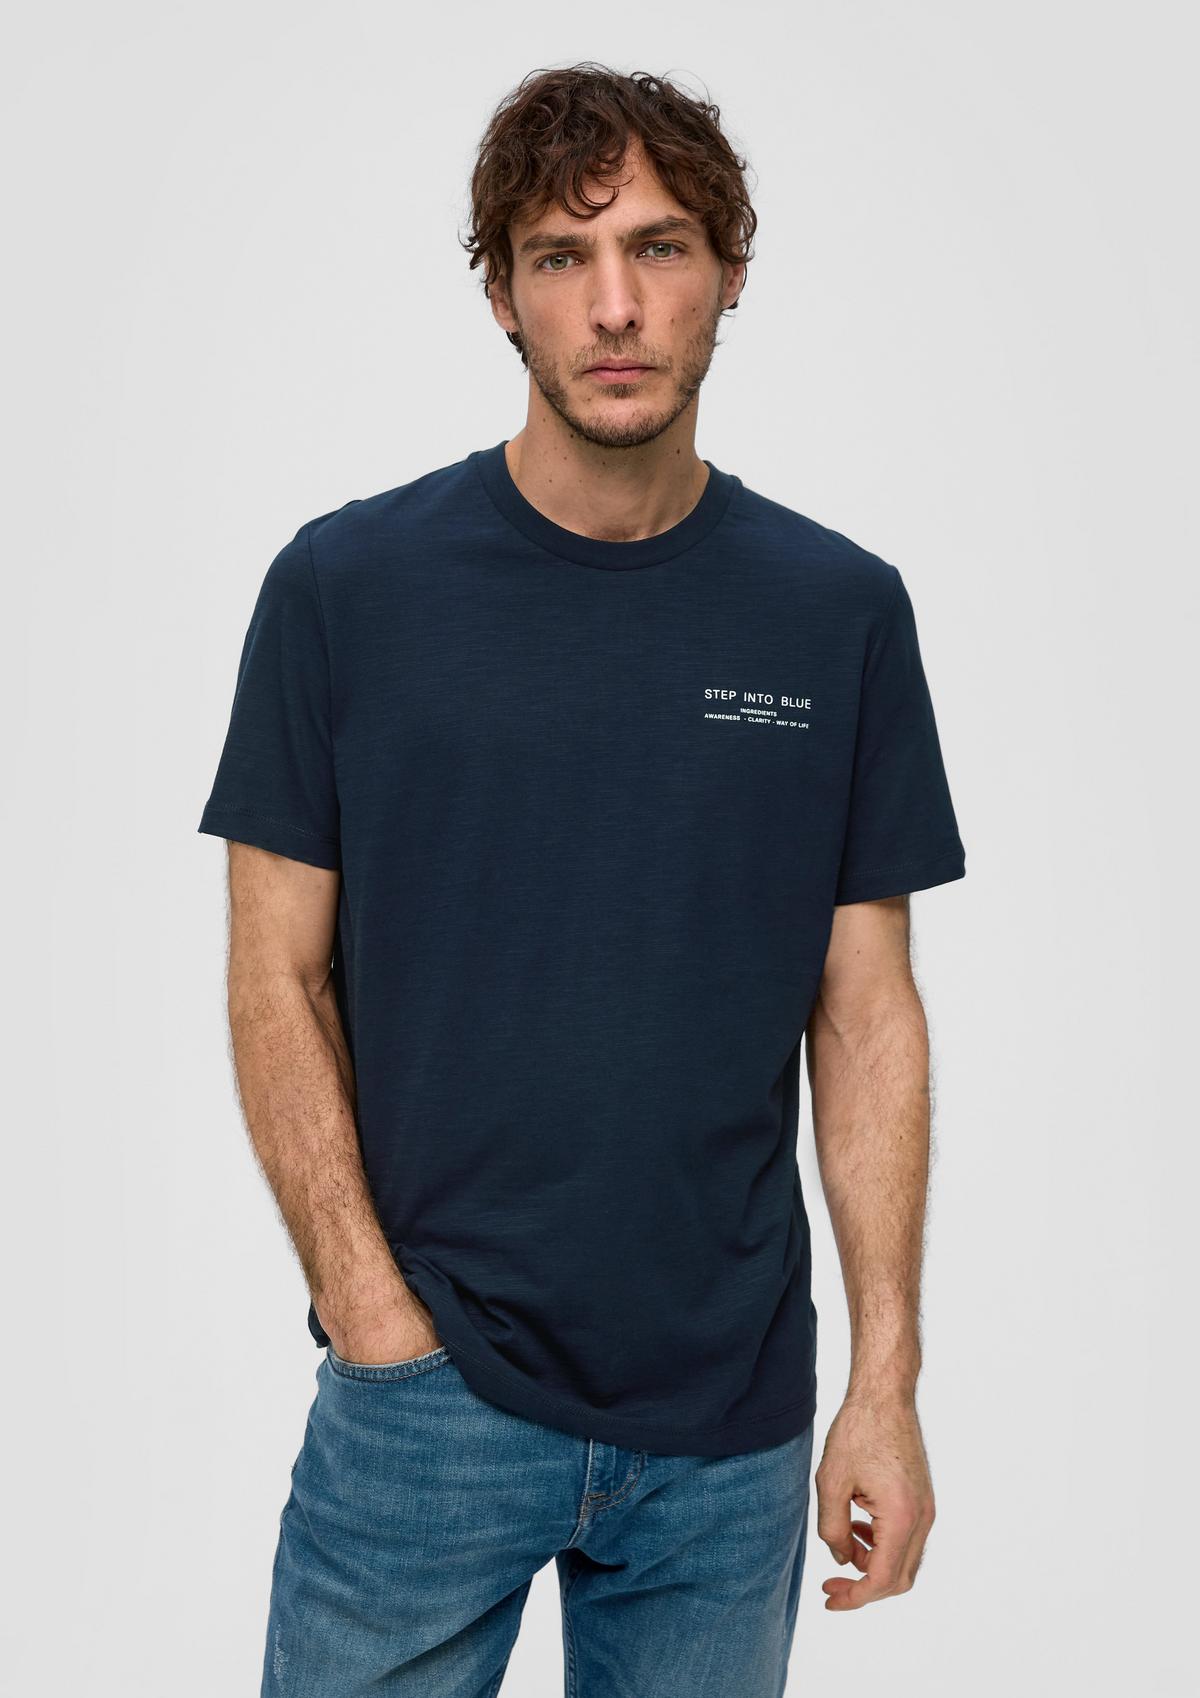 s.Oliver T-shirt with a round neckline